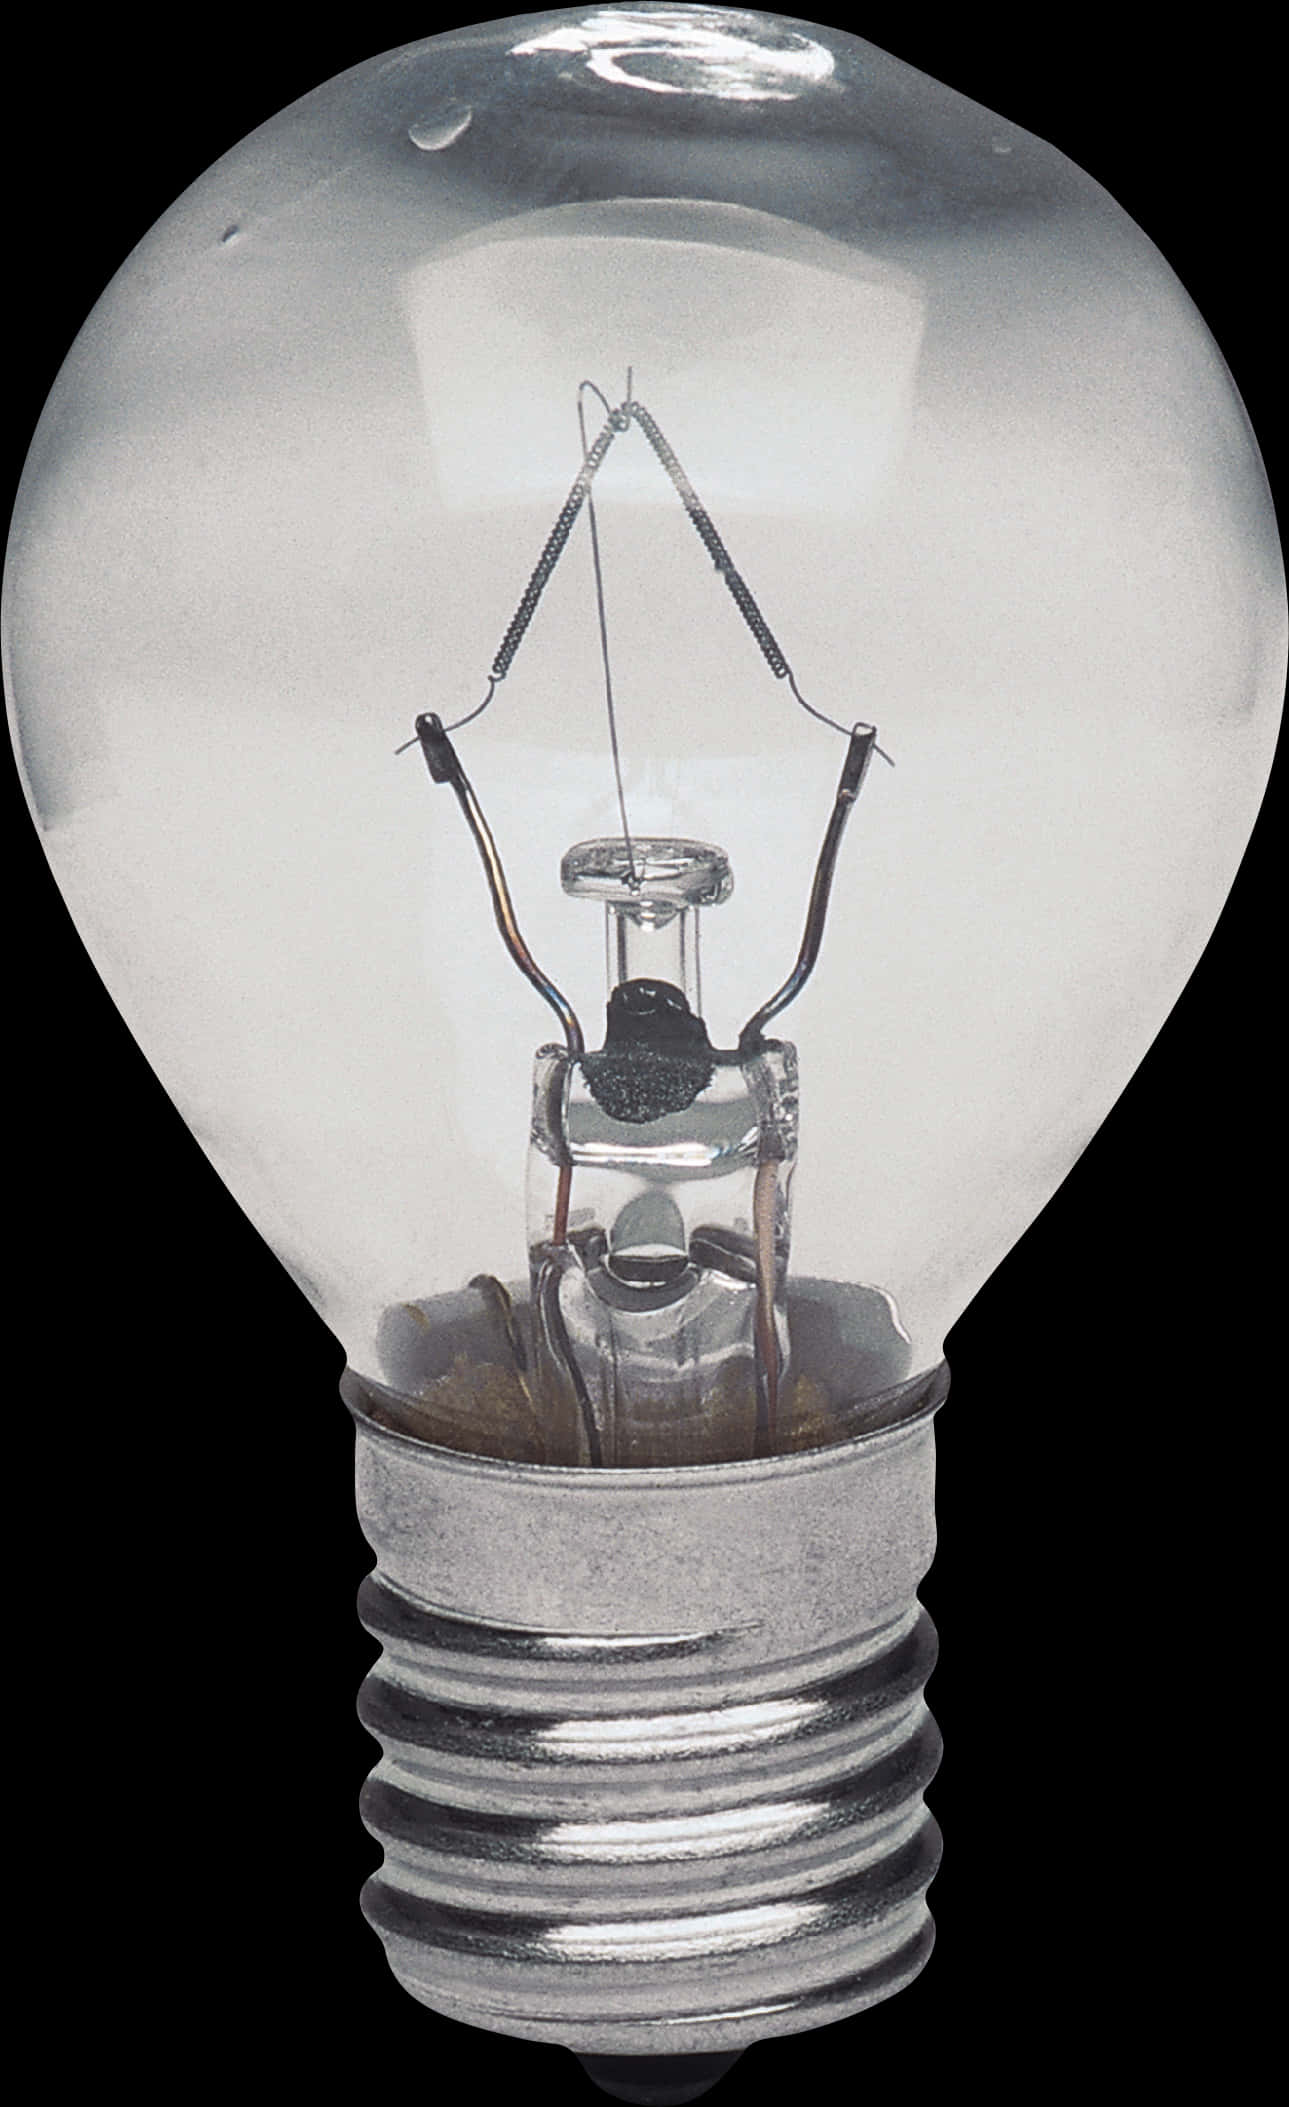 A Close-up Of A Light Bulb